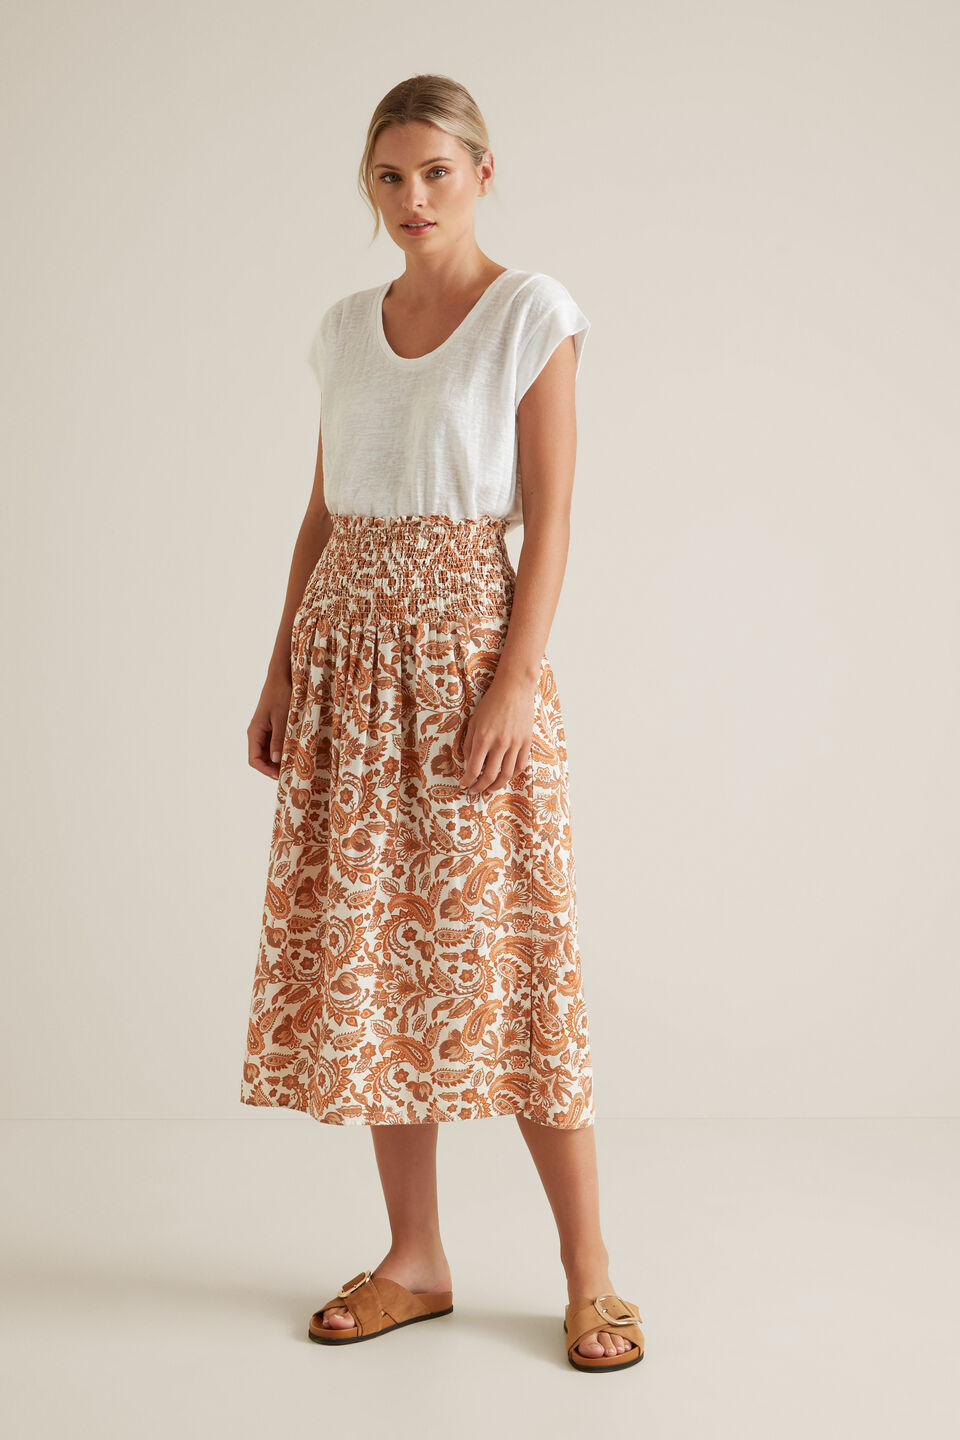 Shirred Paisley Skirt  